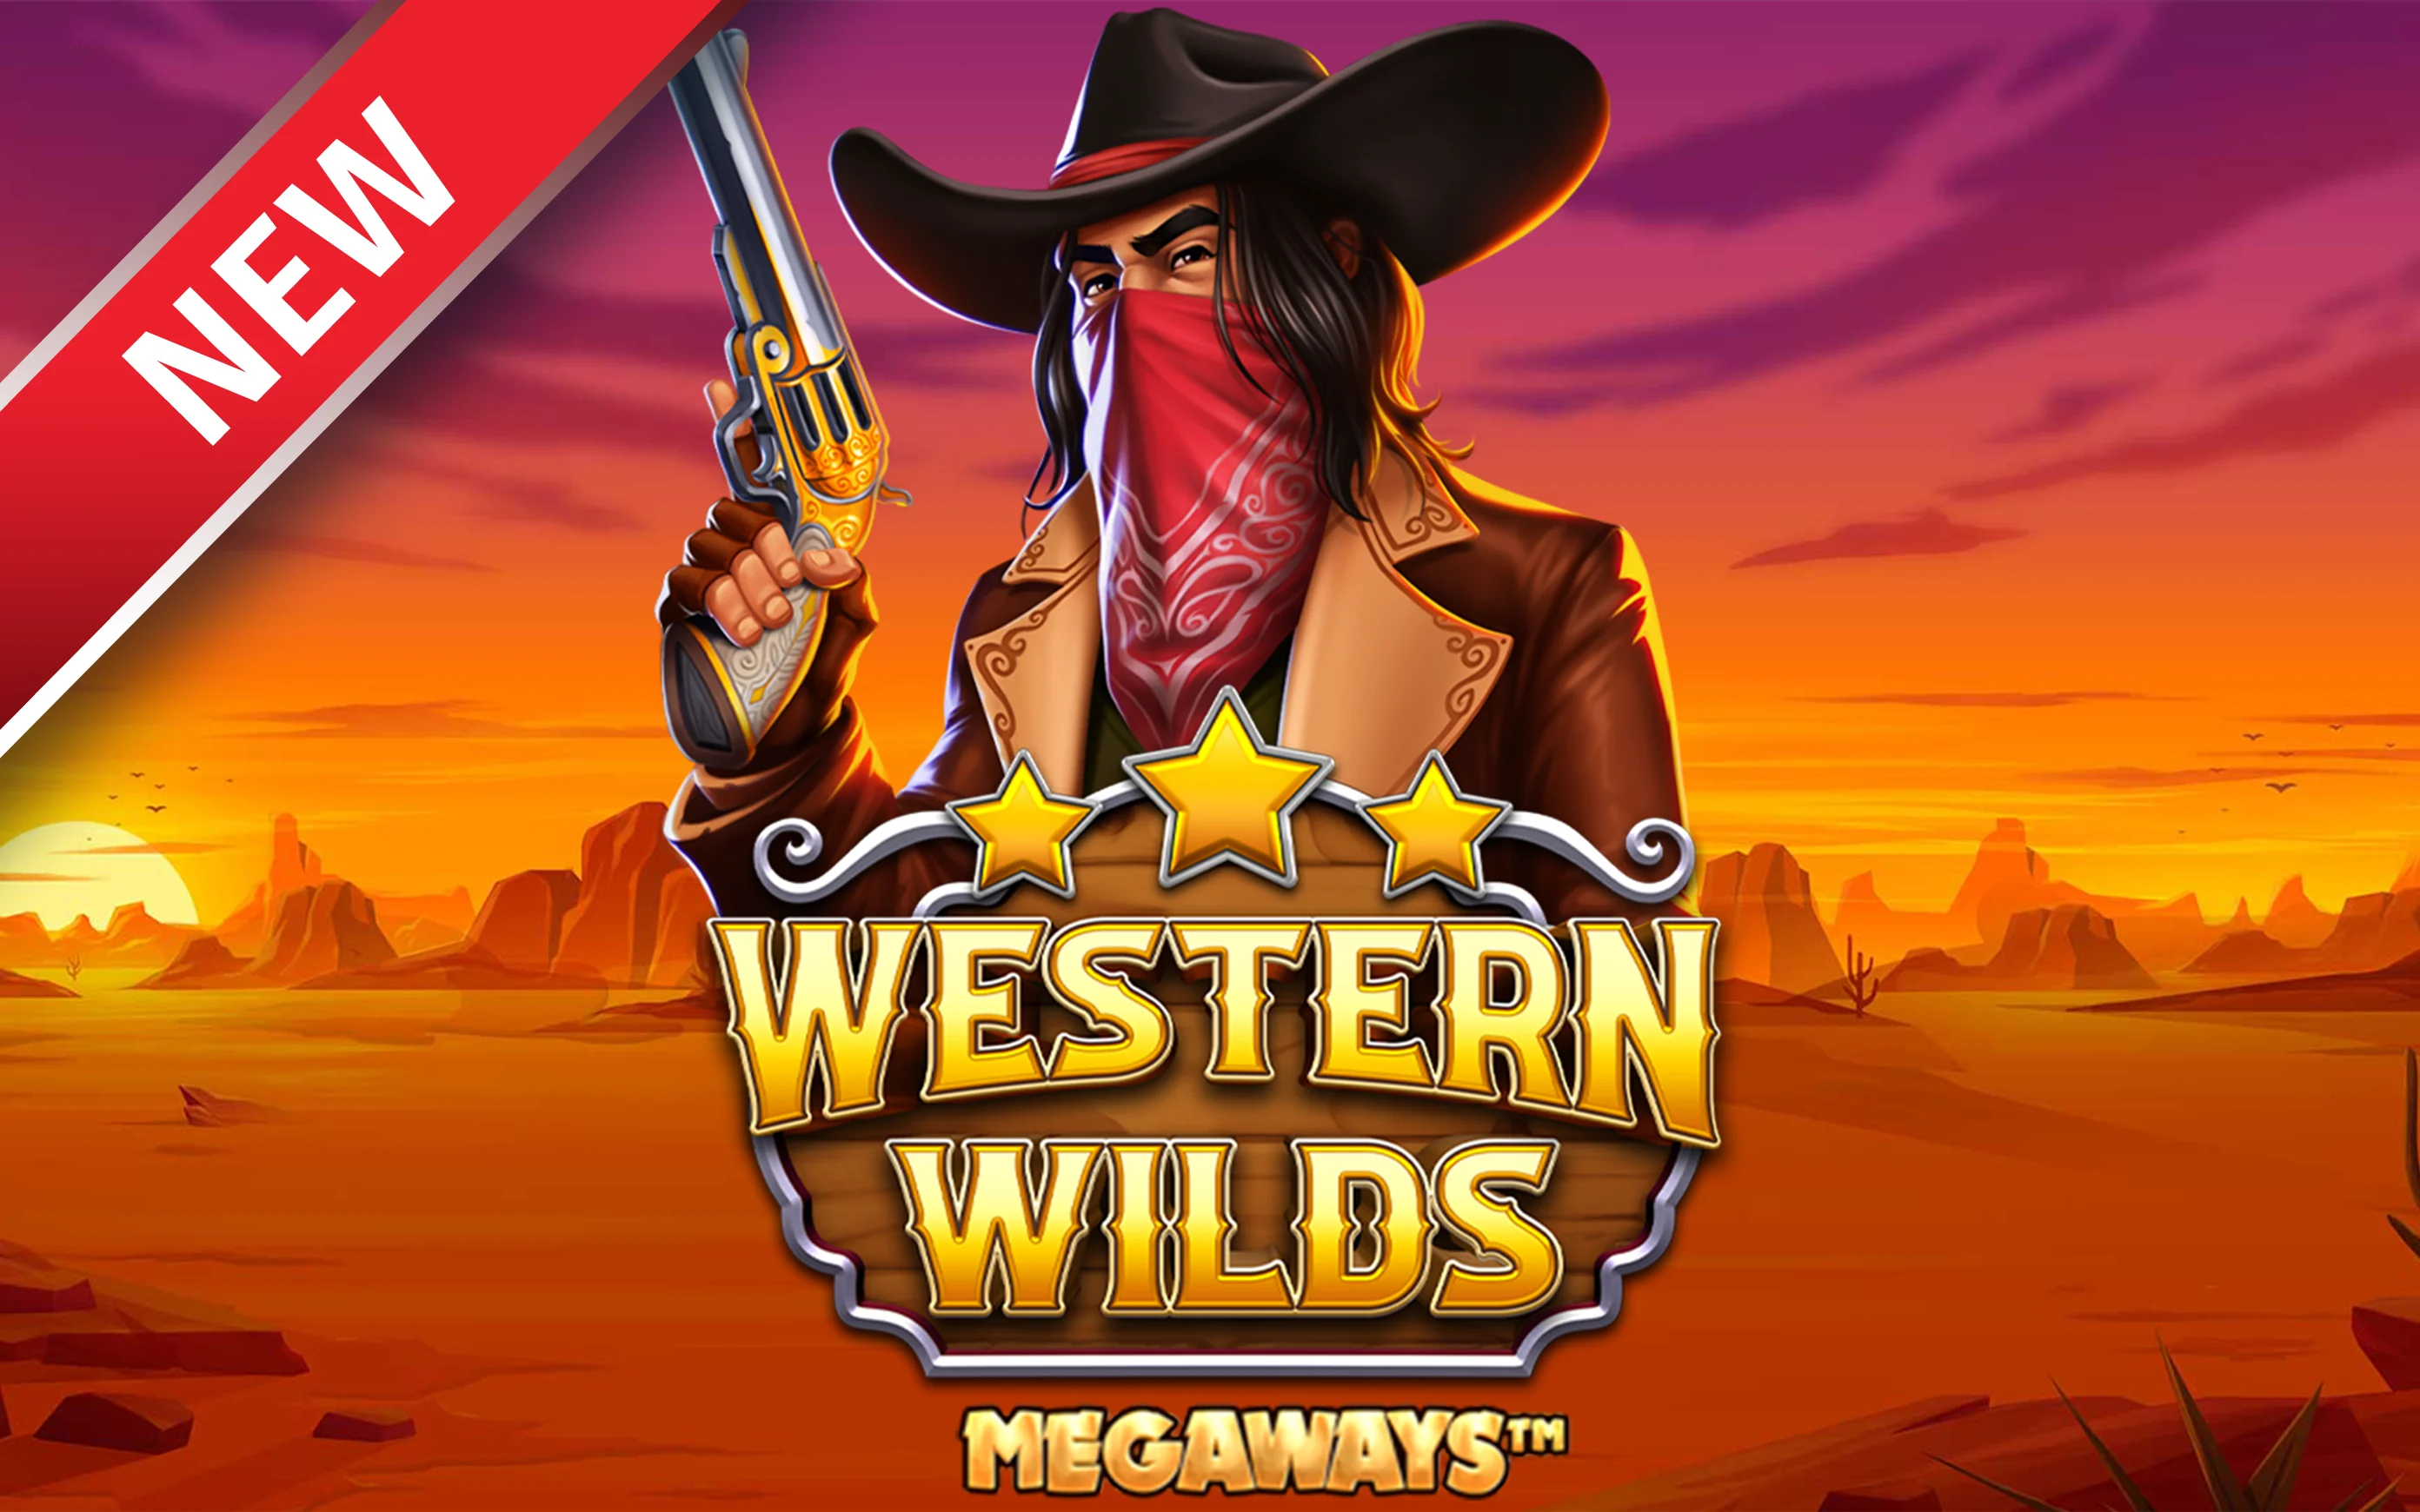 Gioca a Western Wilds Megaways sul casino online Starcasino.be